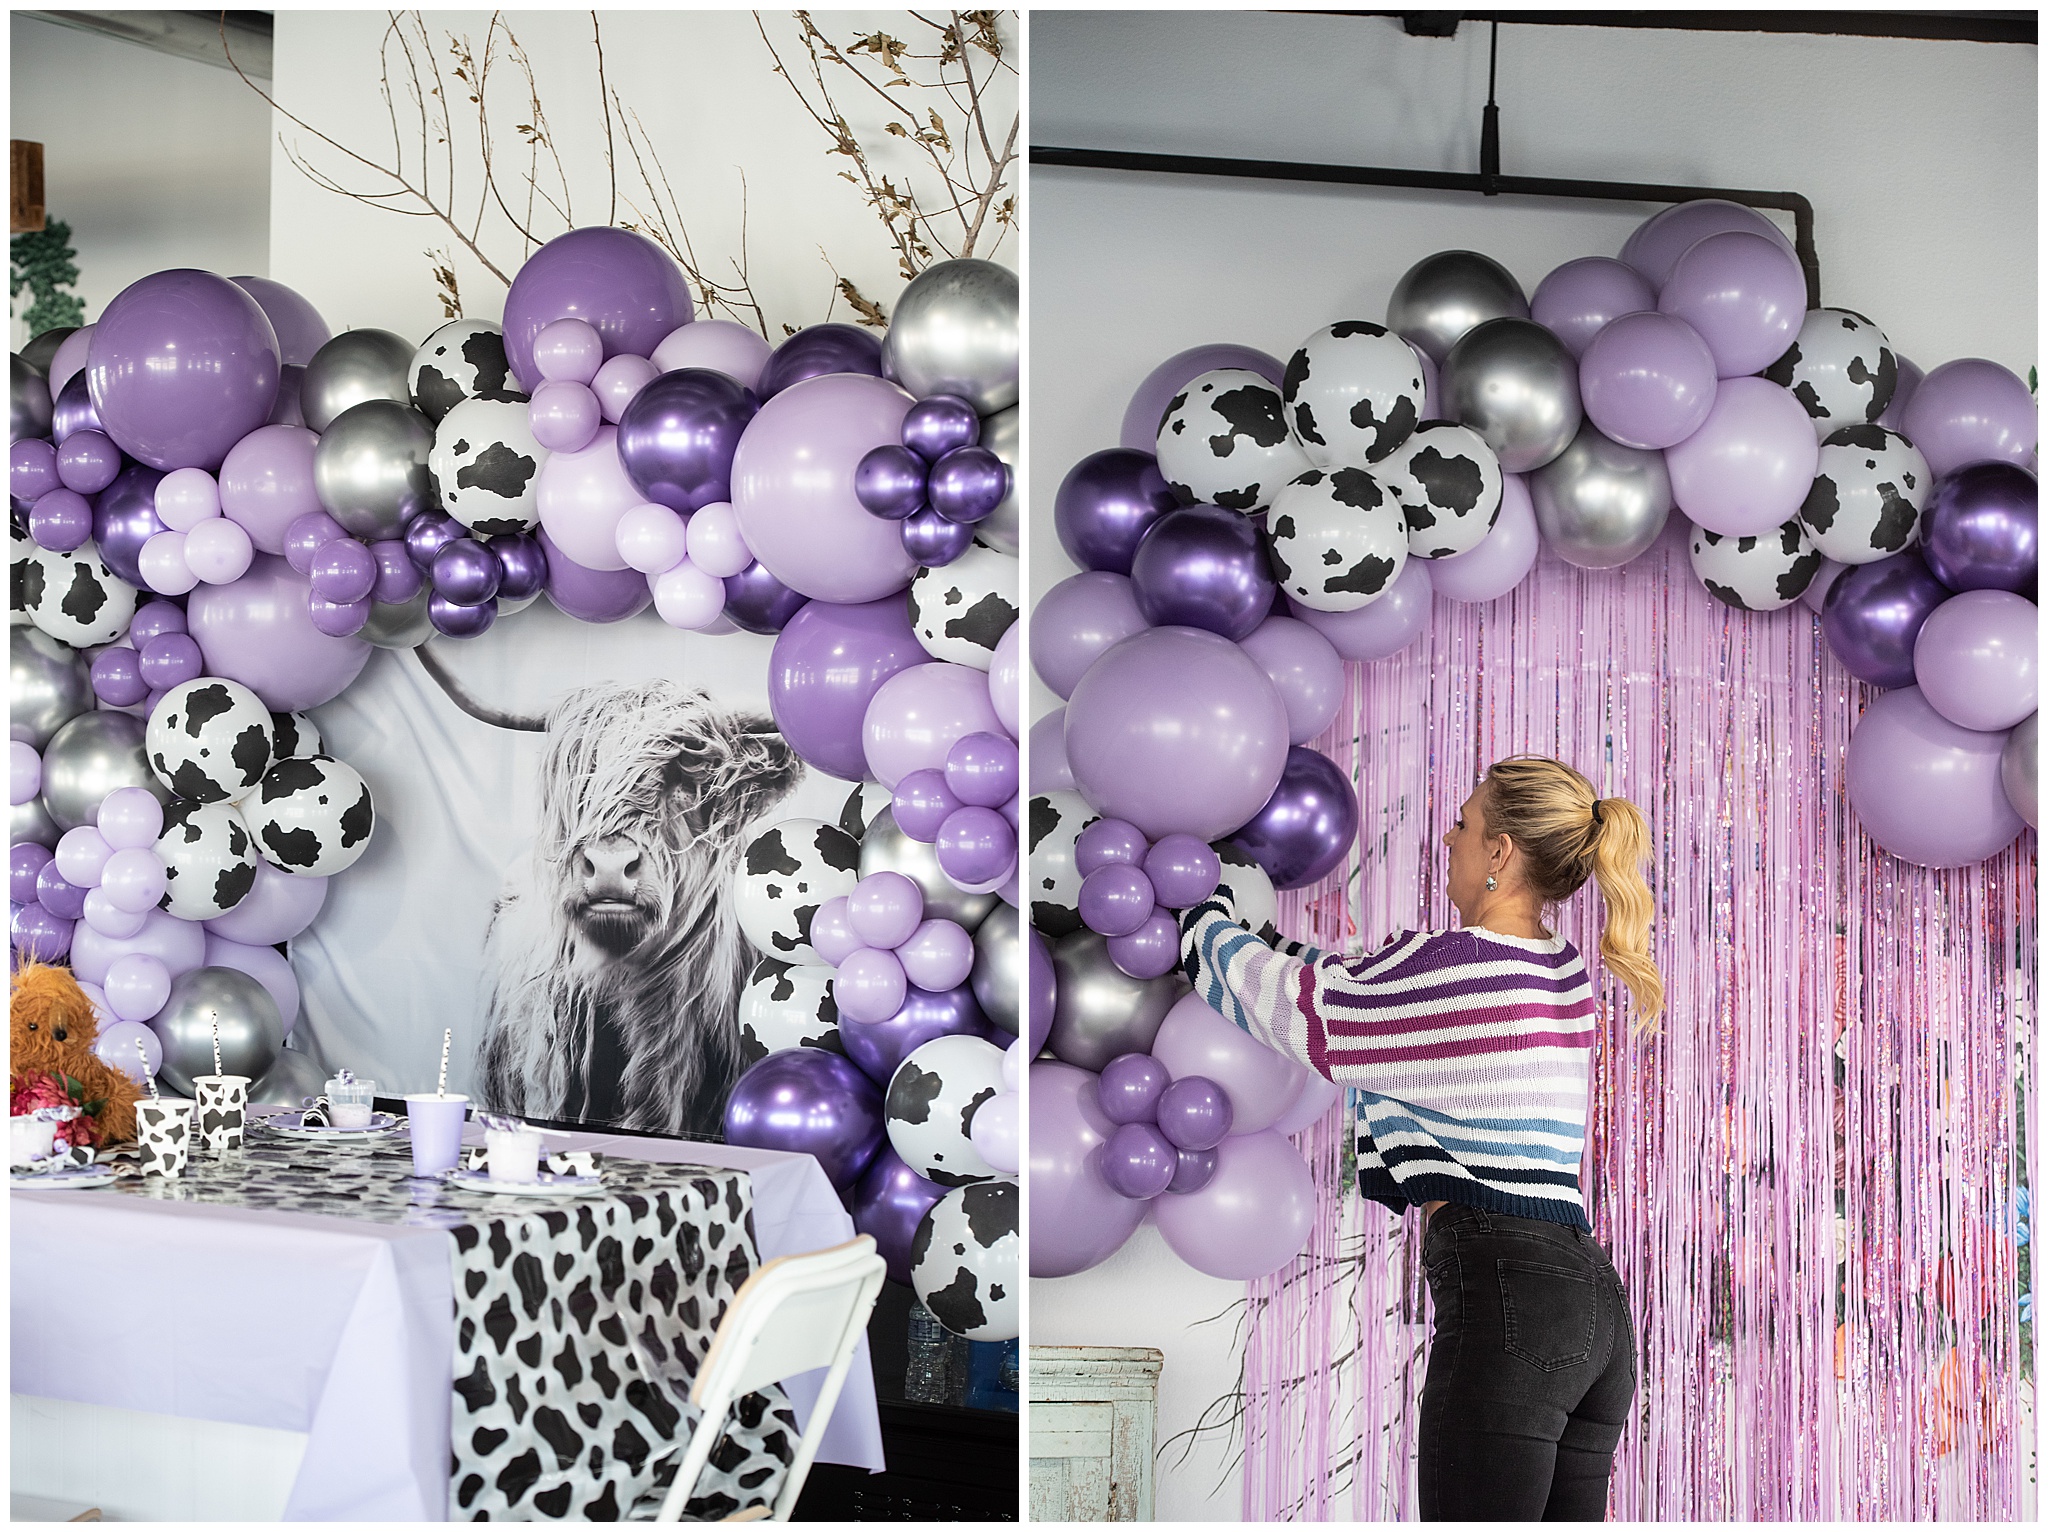 A woman fixes purple cow balloon decorations for a birthday party balloons colorado springs co